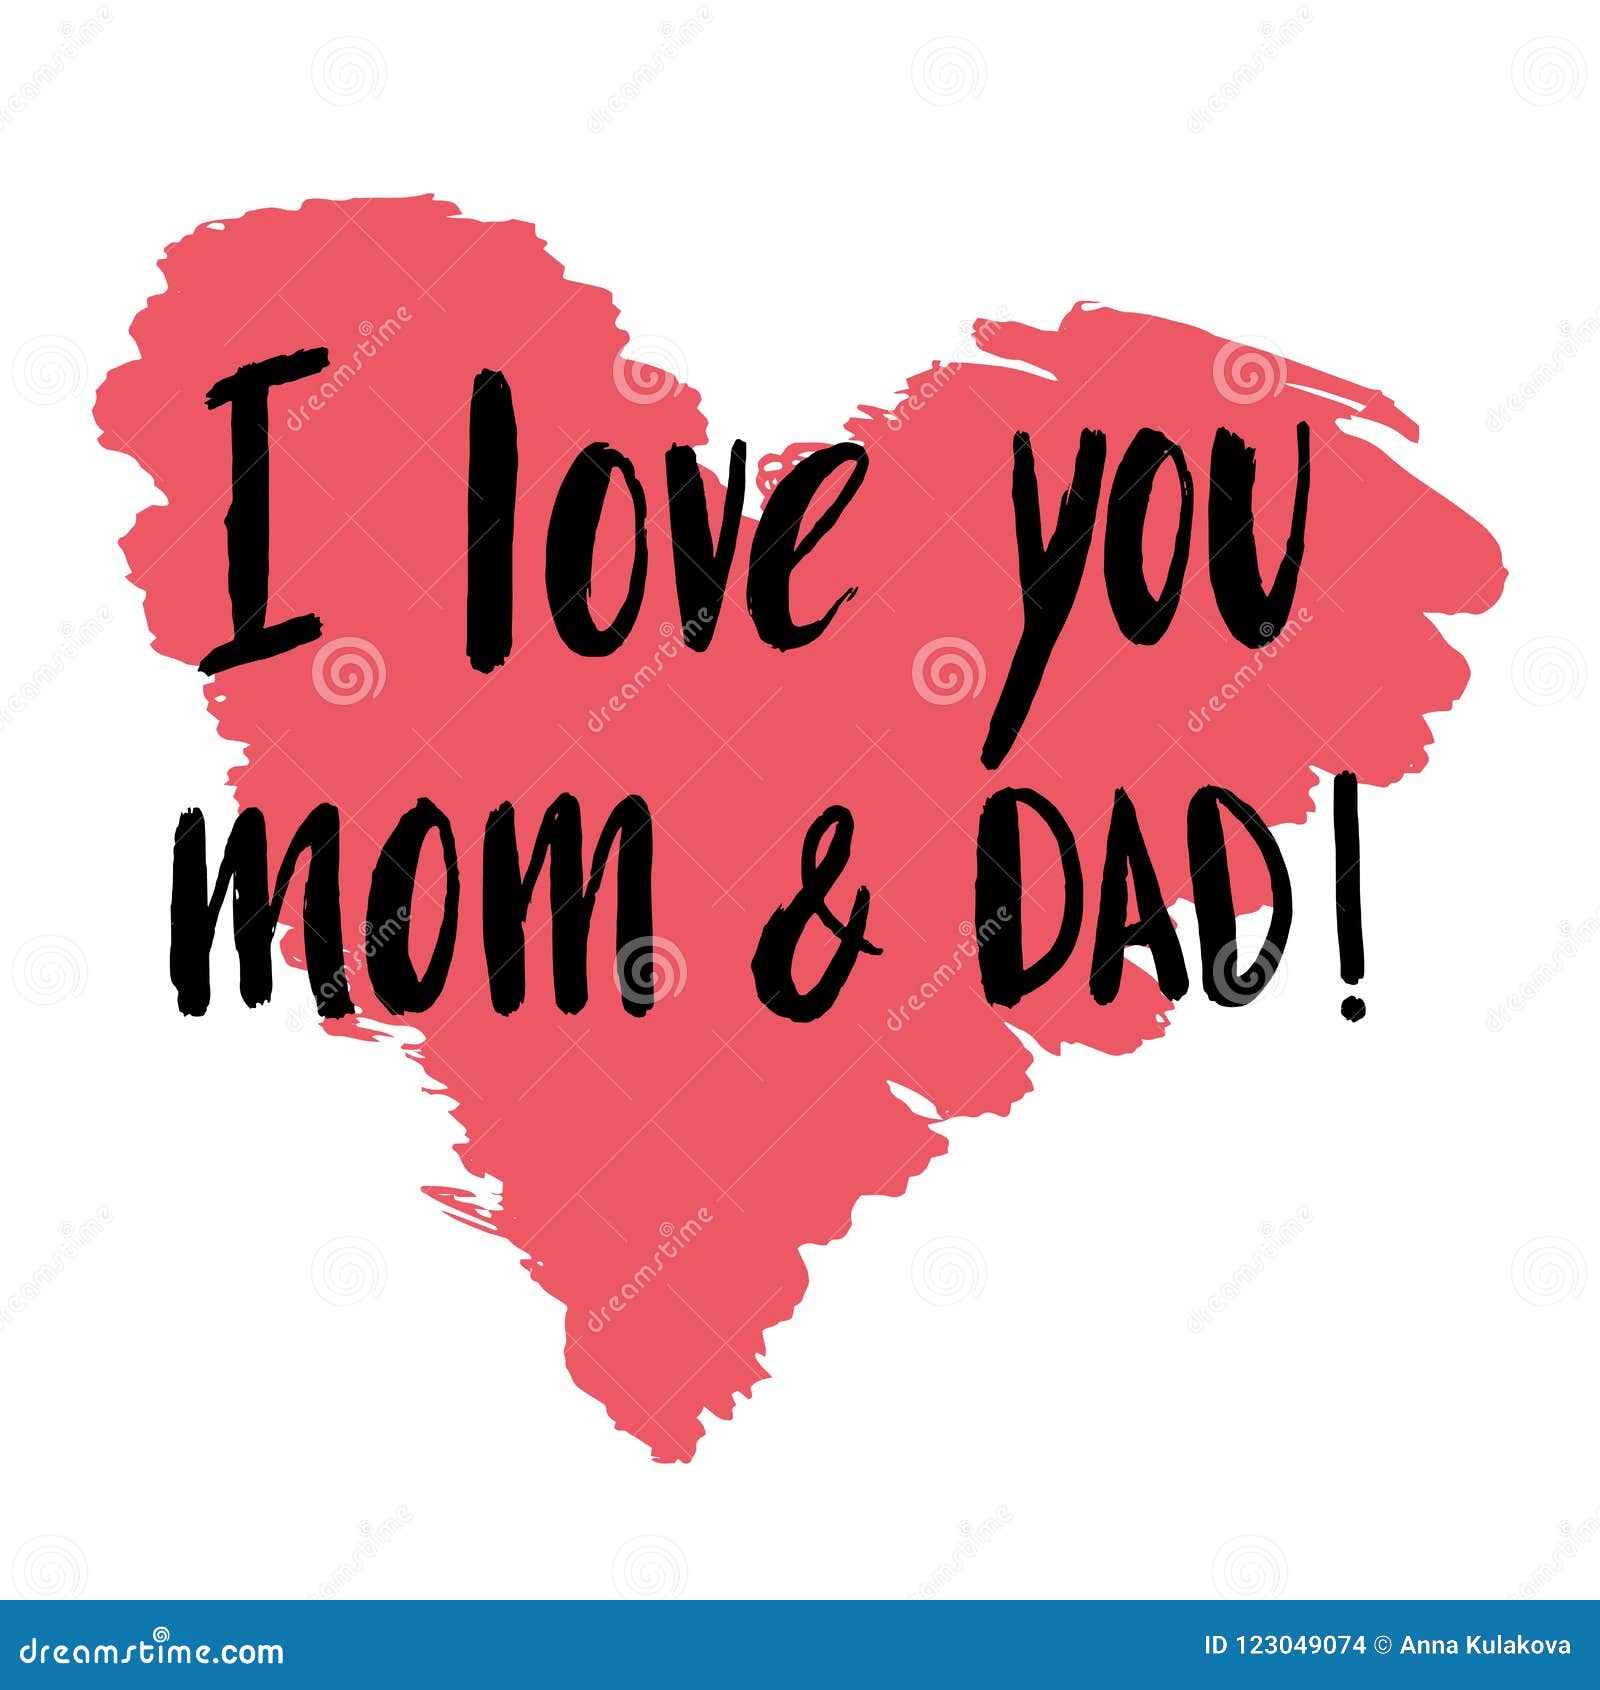 Love Mom Dad Wallpaper Hd Download